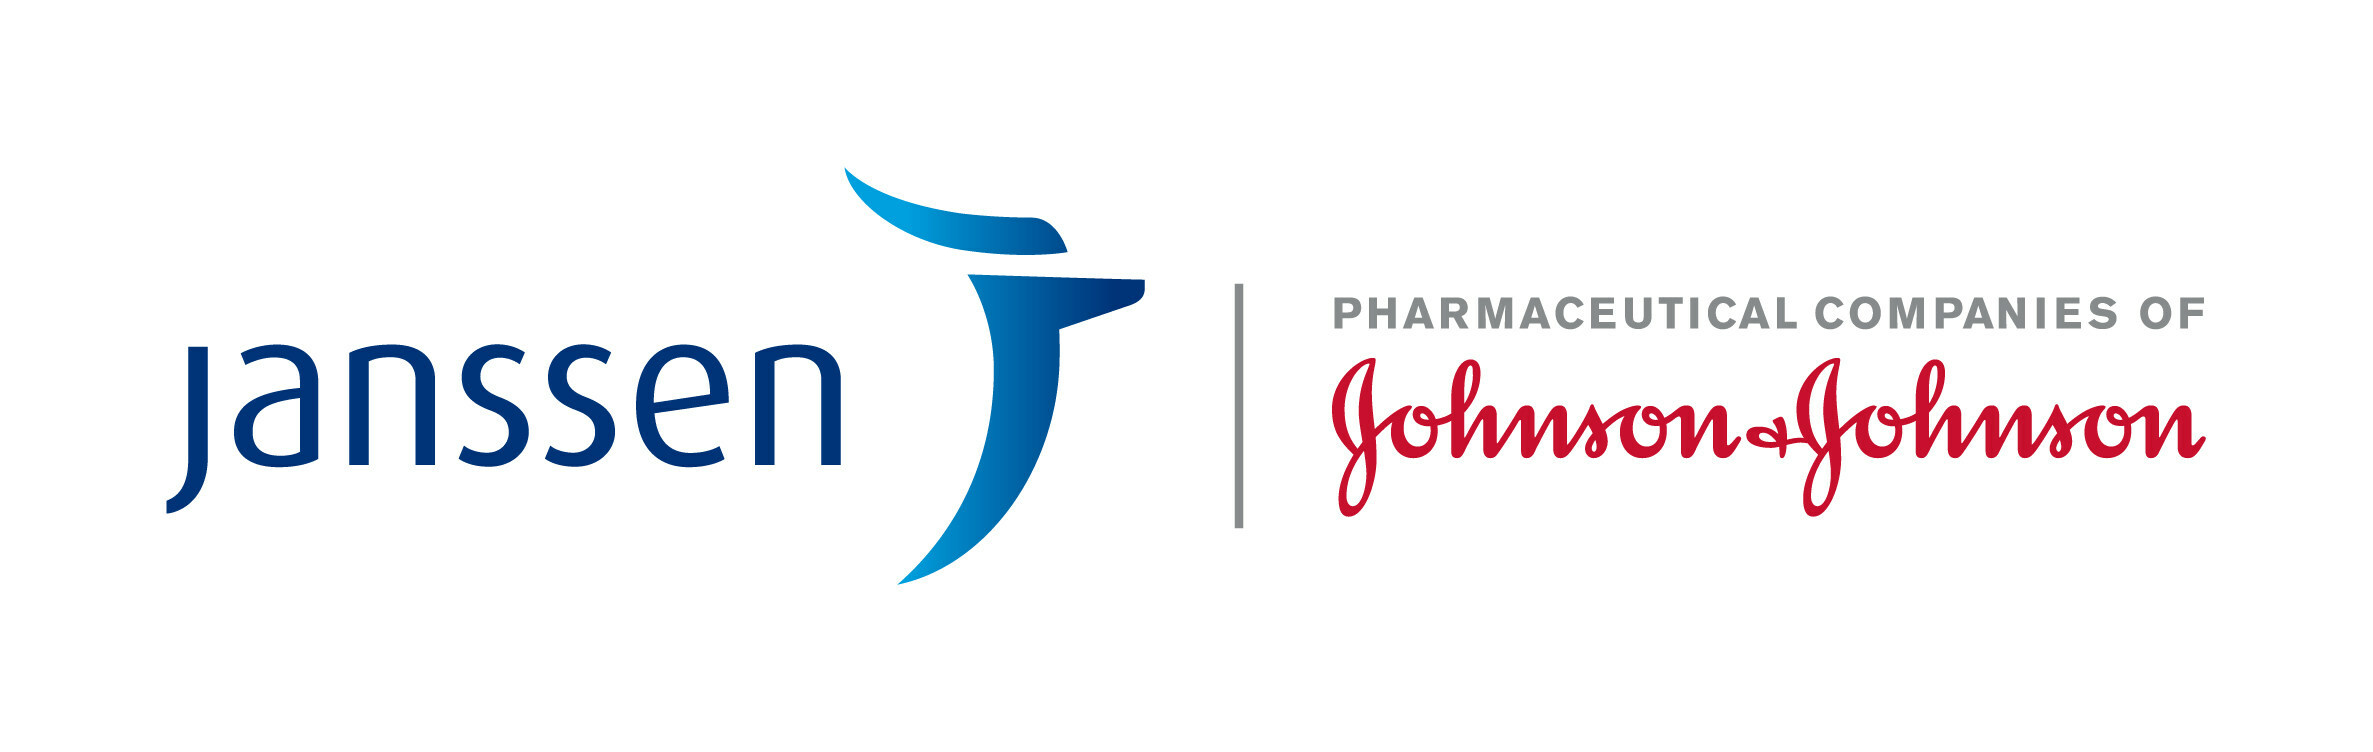 Janssen Pharmaceutical Companies of Johnson & Johnson (PRNewsfoto/The Janssen Pharmaceutical Companies of Johnson & Johnson)